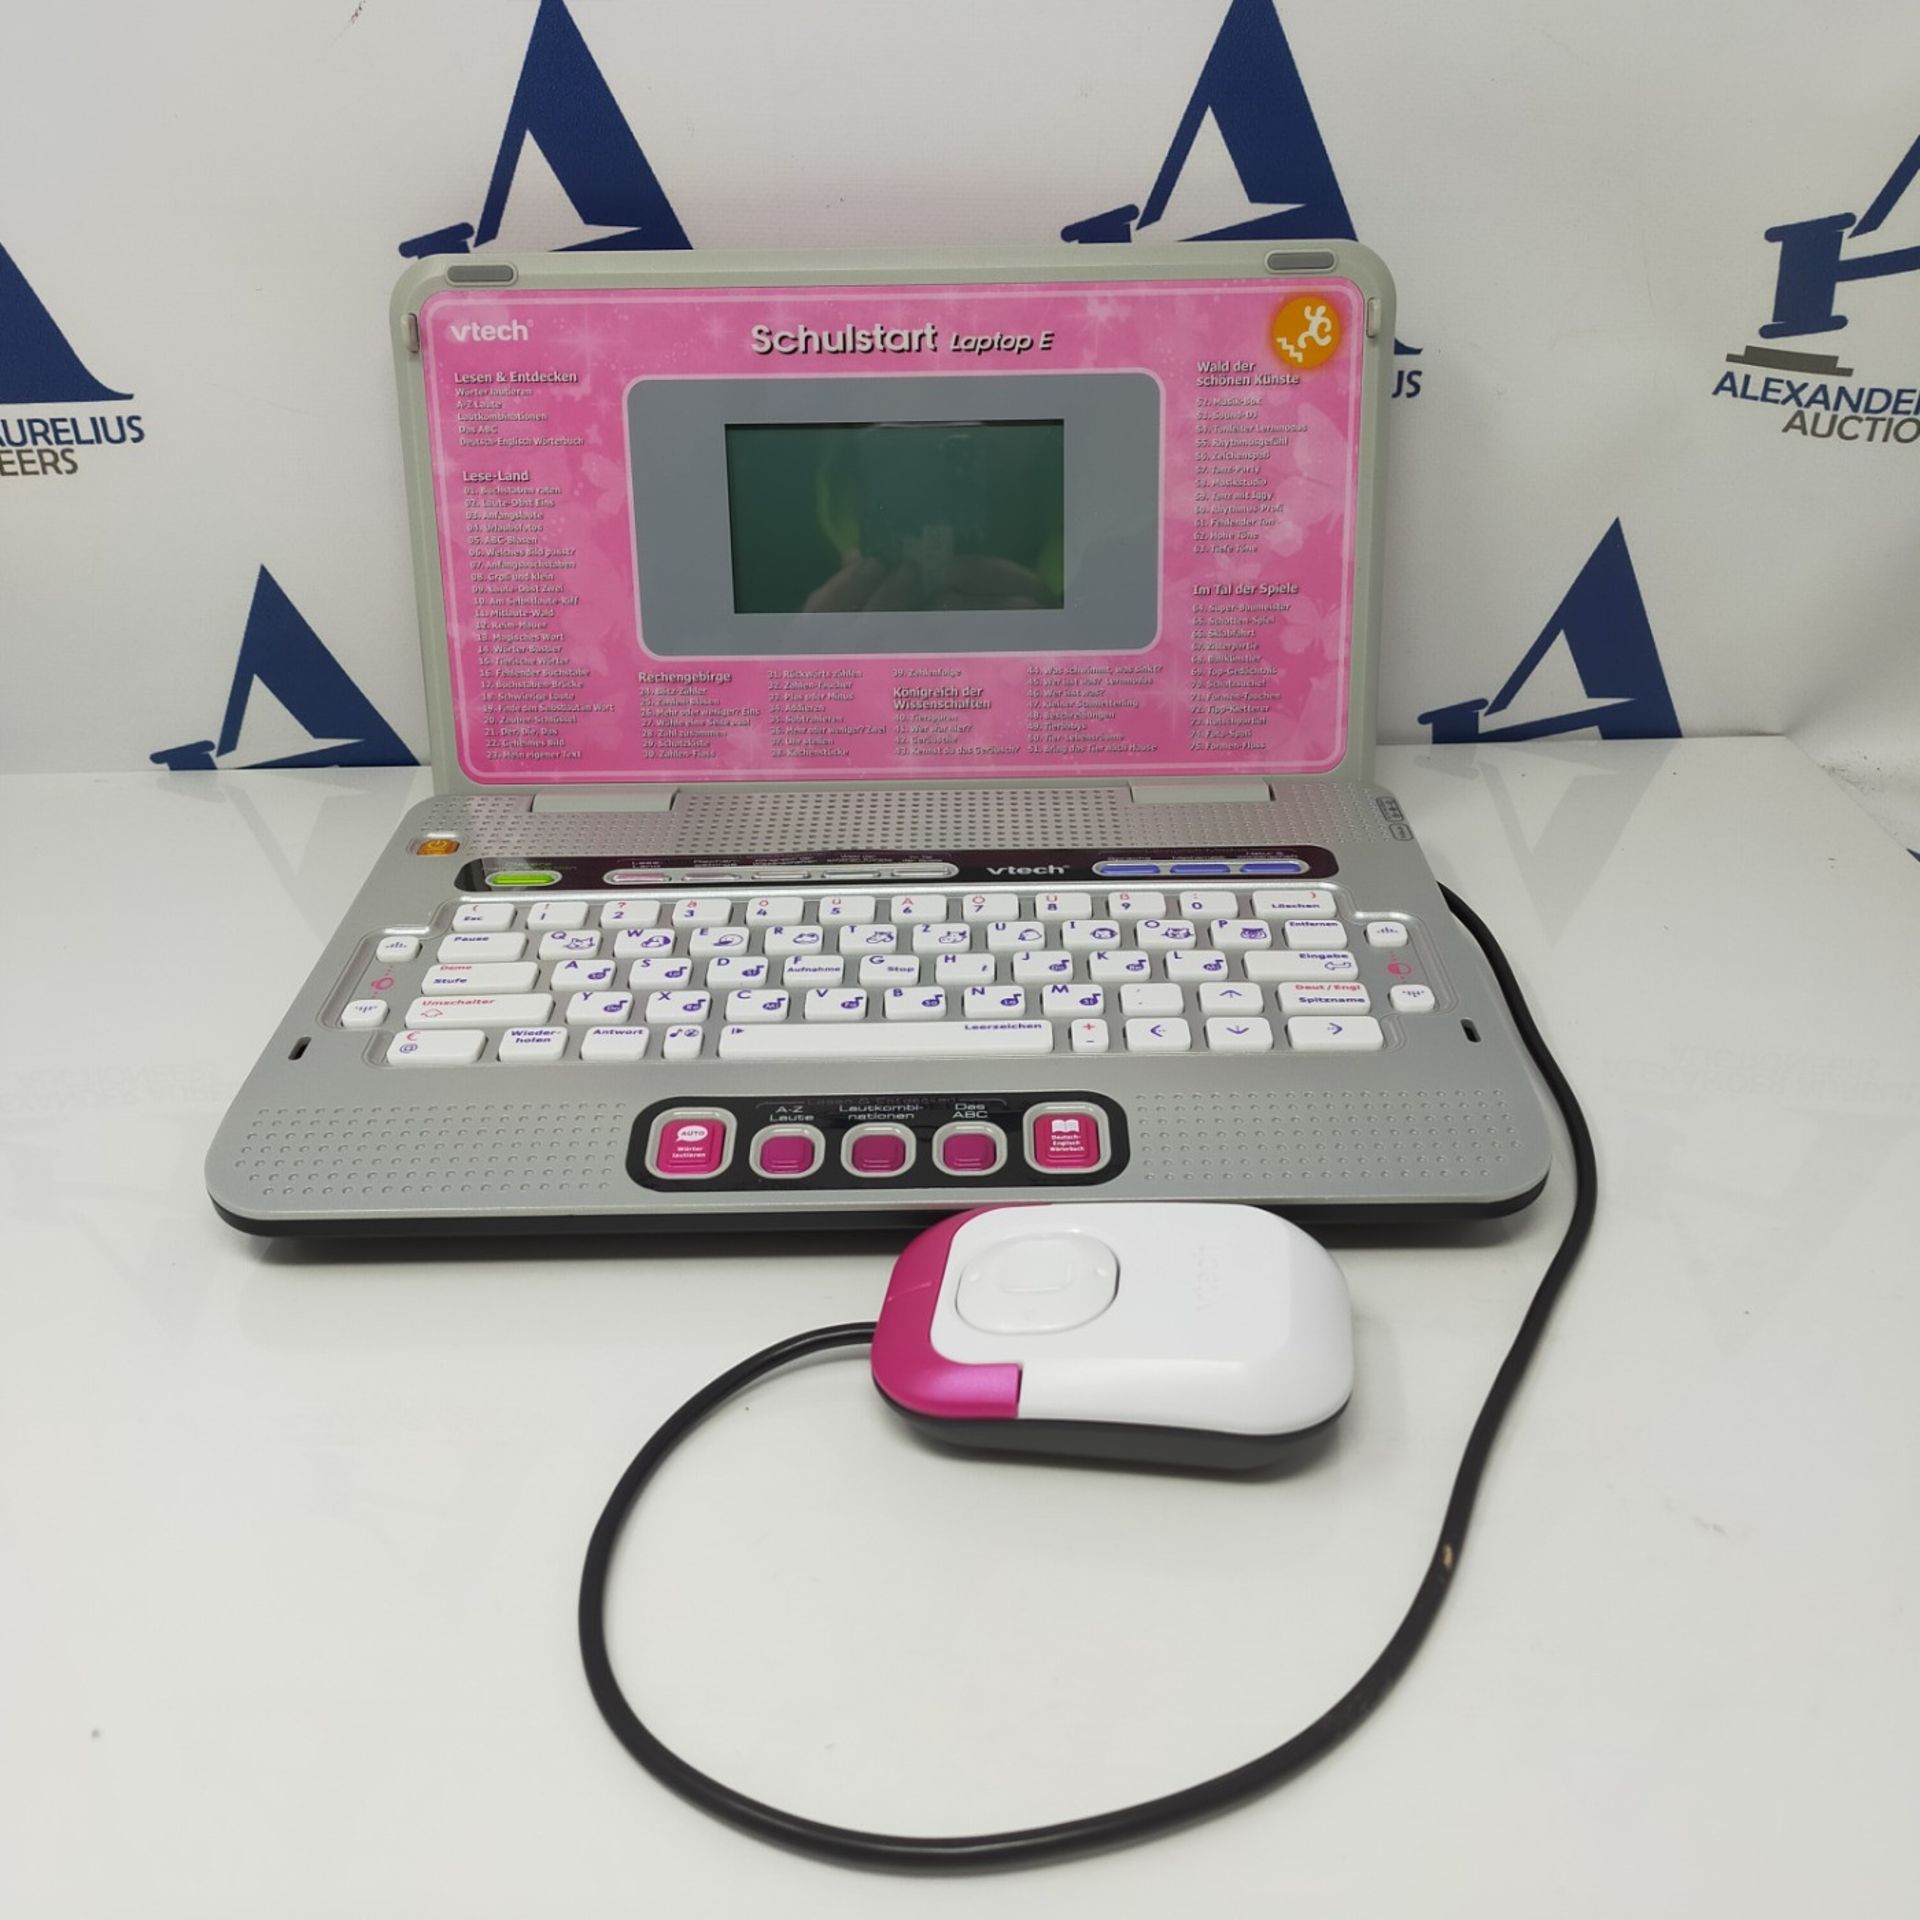 VTech 80-109794 - Schulstart Laptop E pink - Image 2 of 2